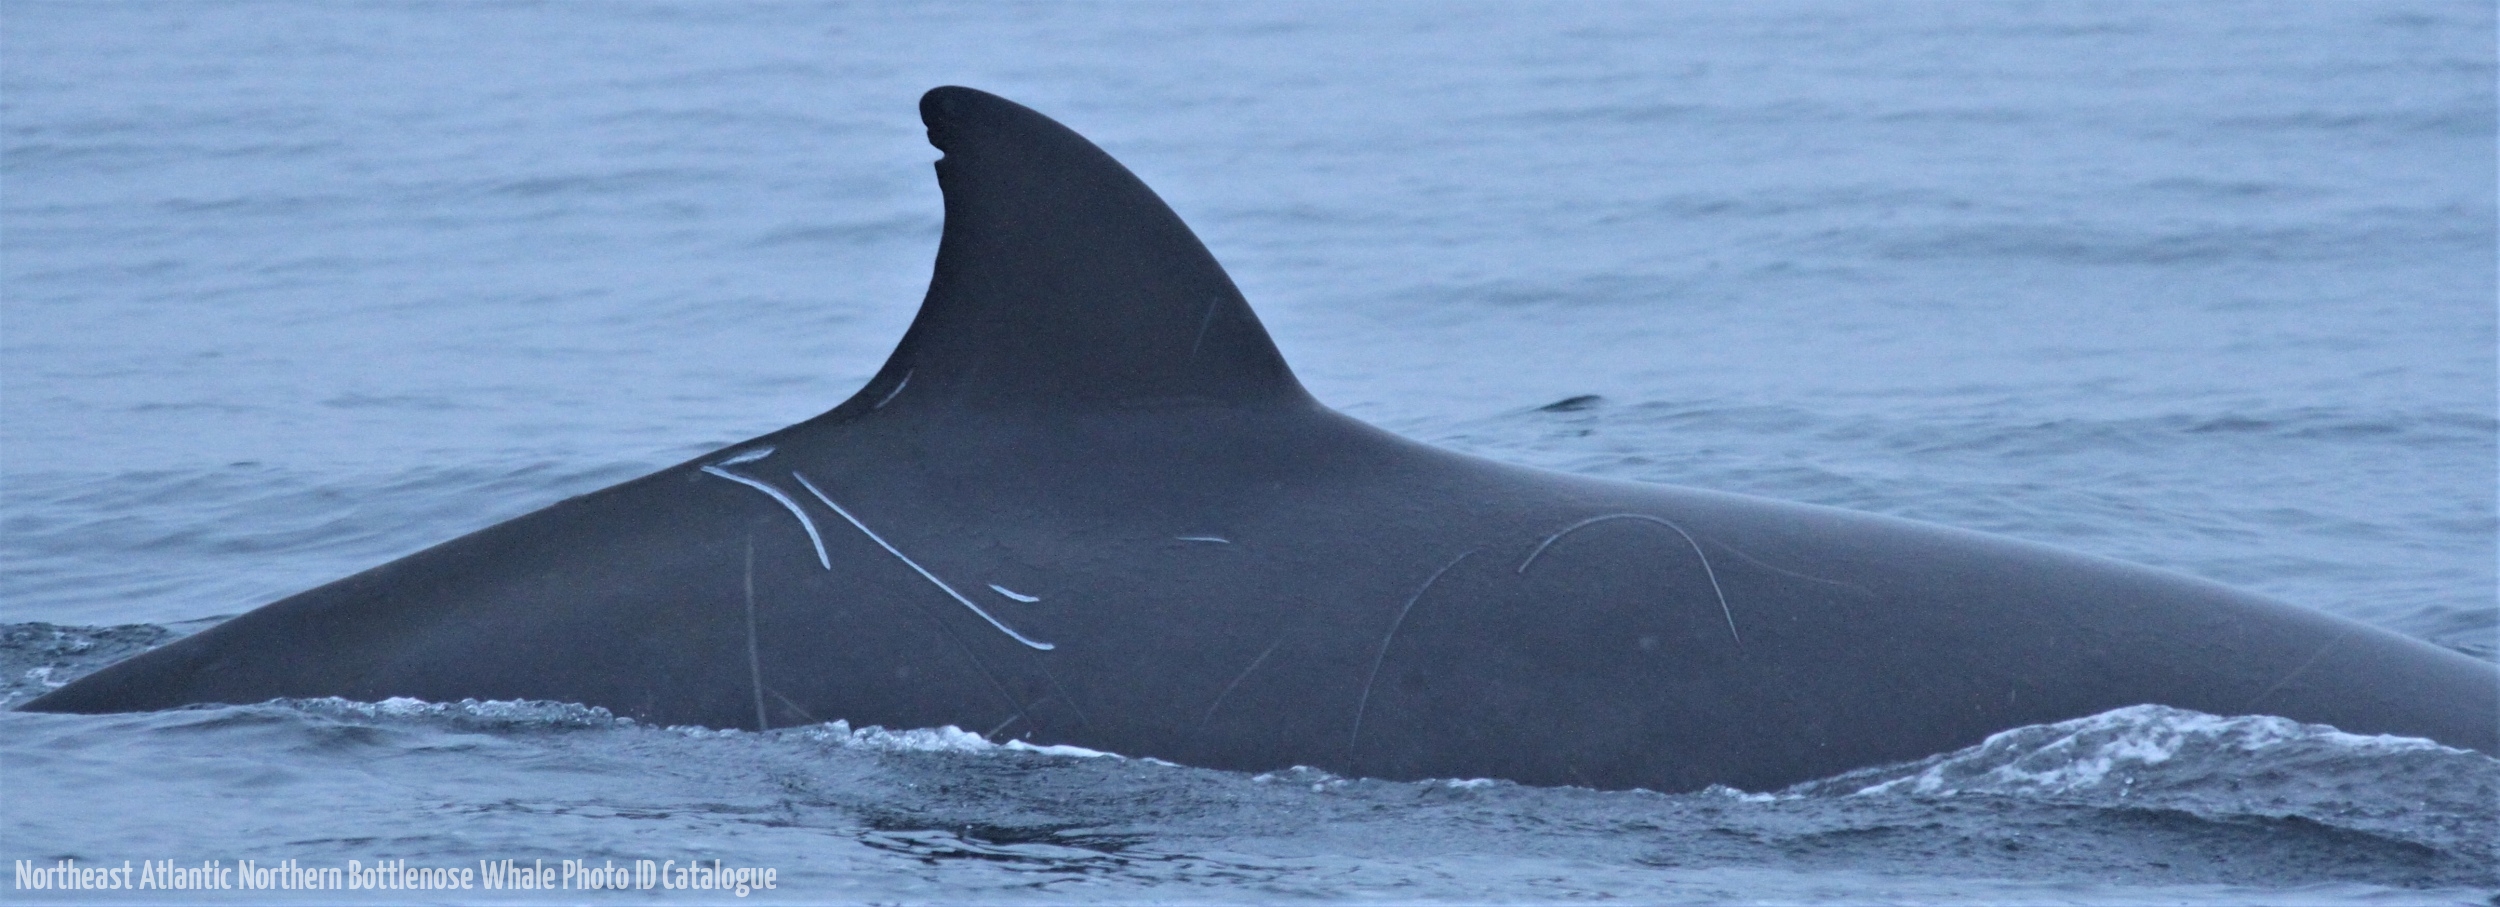 Whale ID: 0270,  Date taken: 01-07-2013,  Photographer: Paul H. Ensor